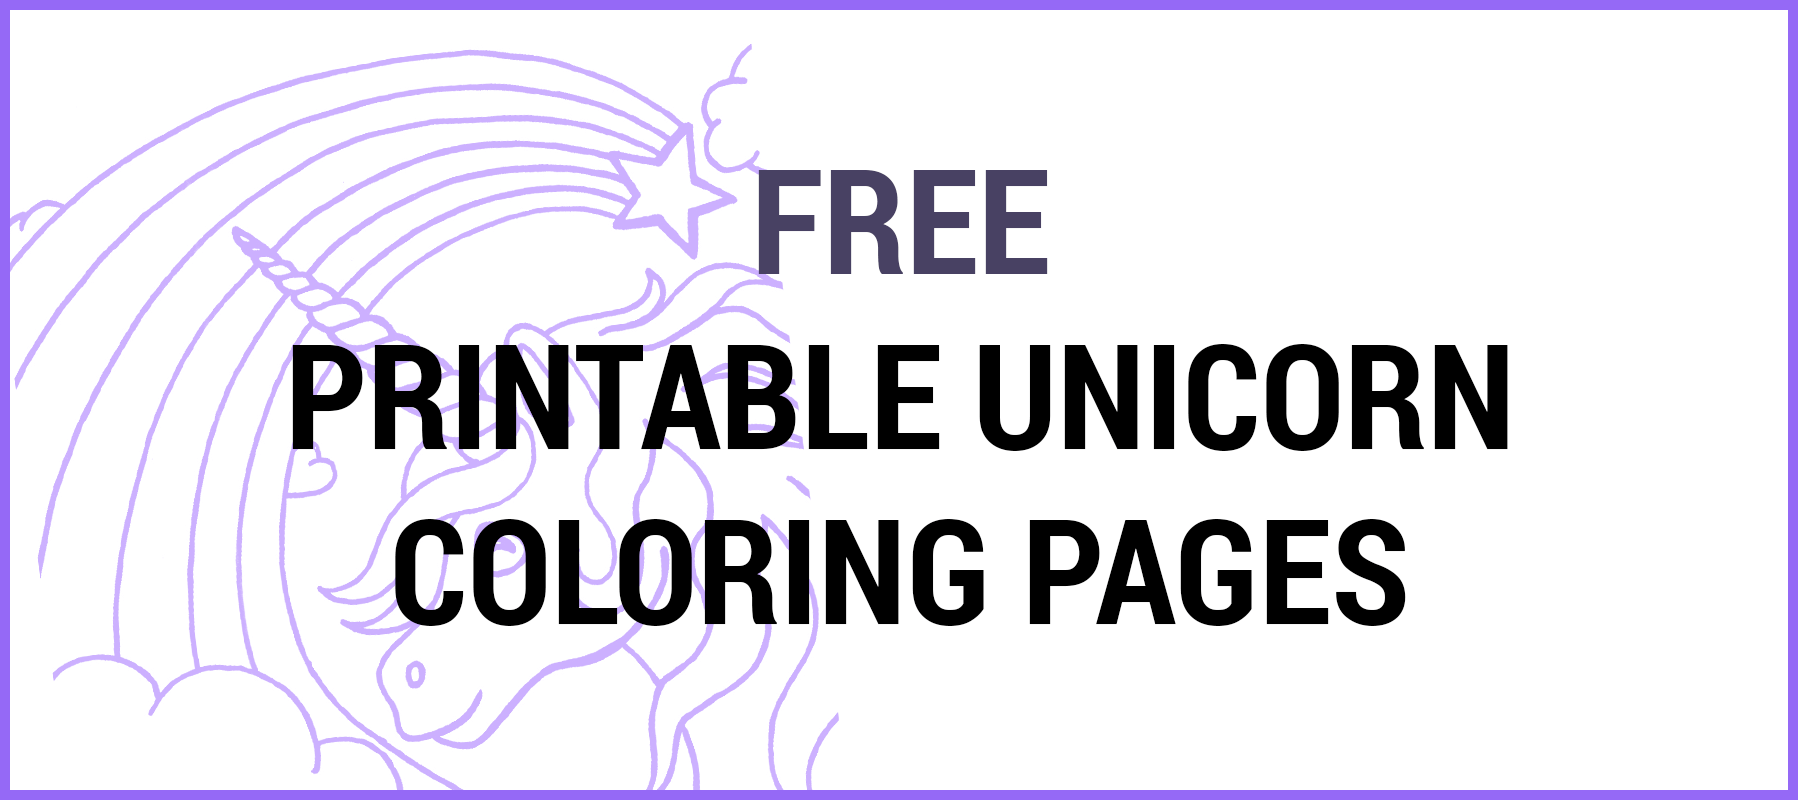 FREE Printable Unicorn Coloring Pages  Unicorn Mania